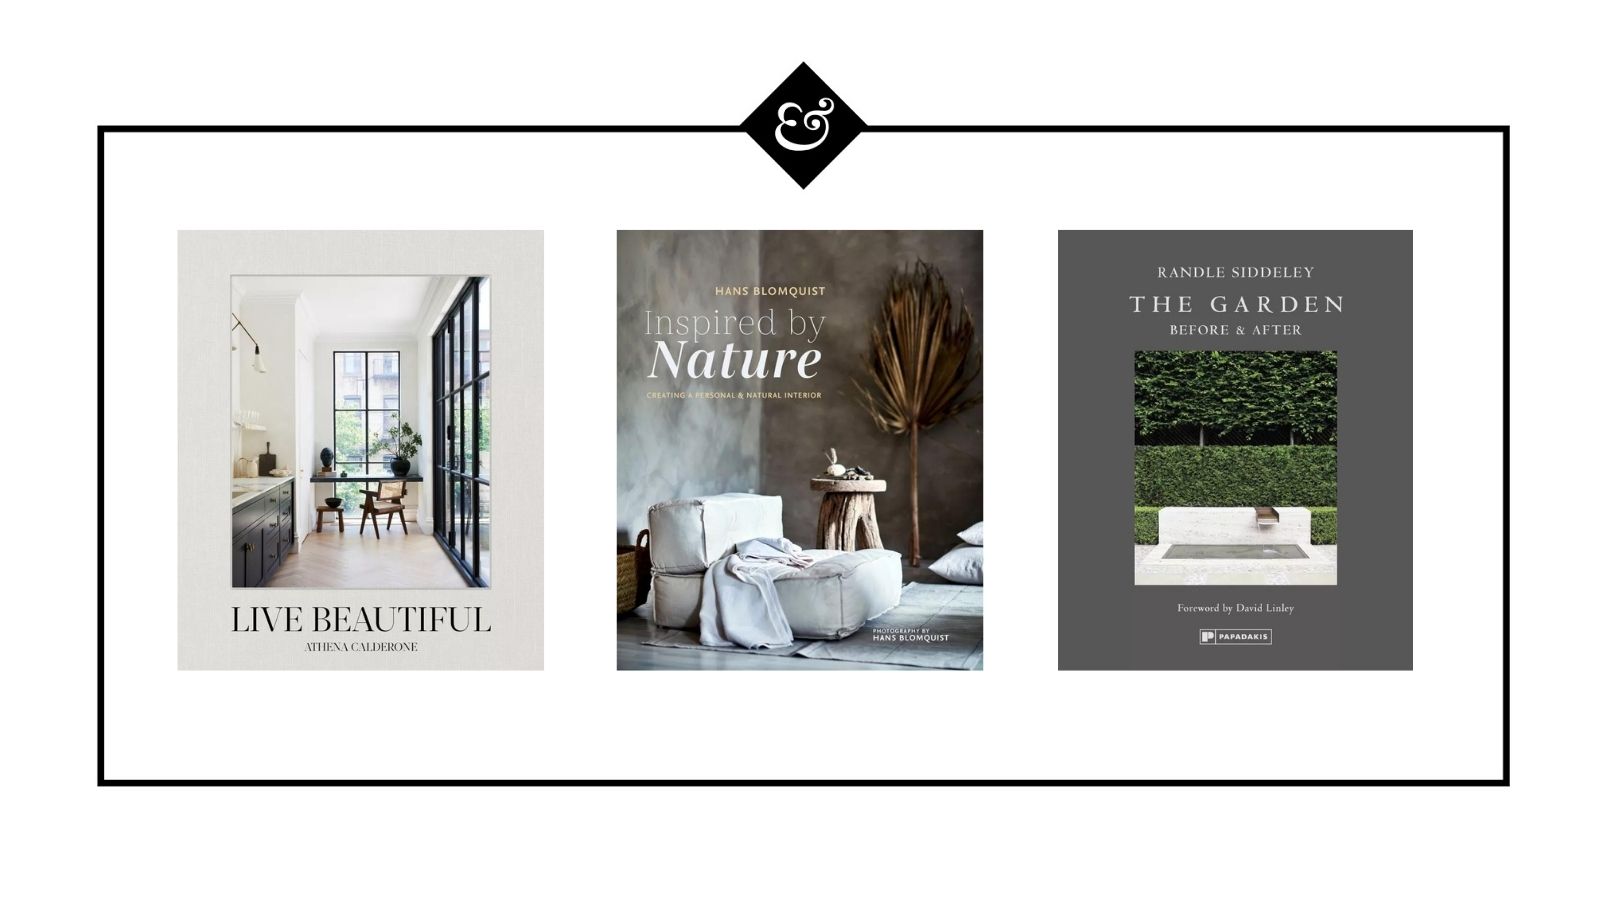 15 new interior design books for the simple, conscious home